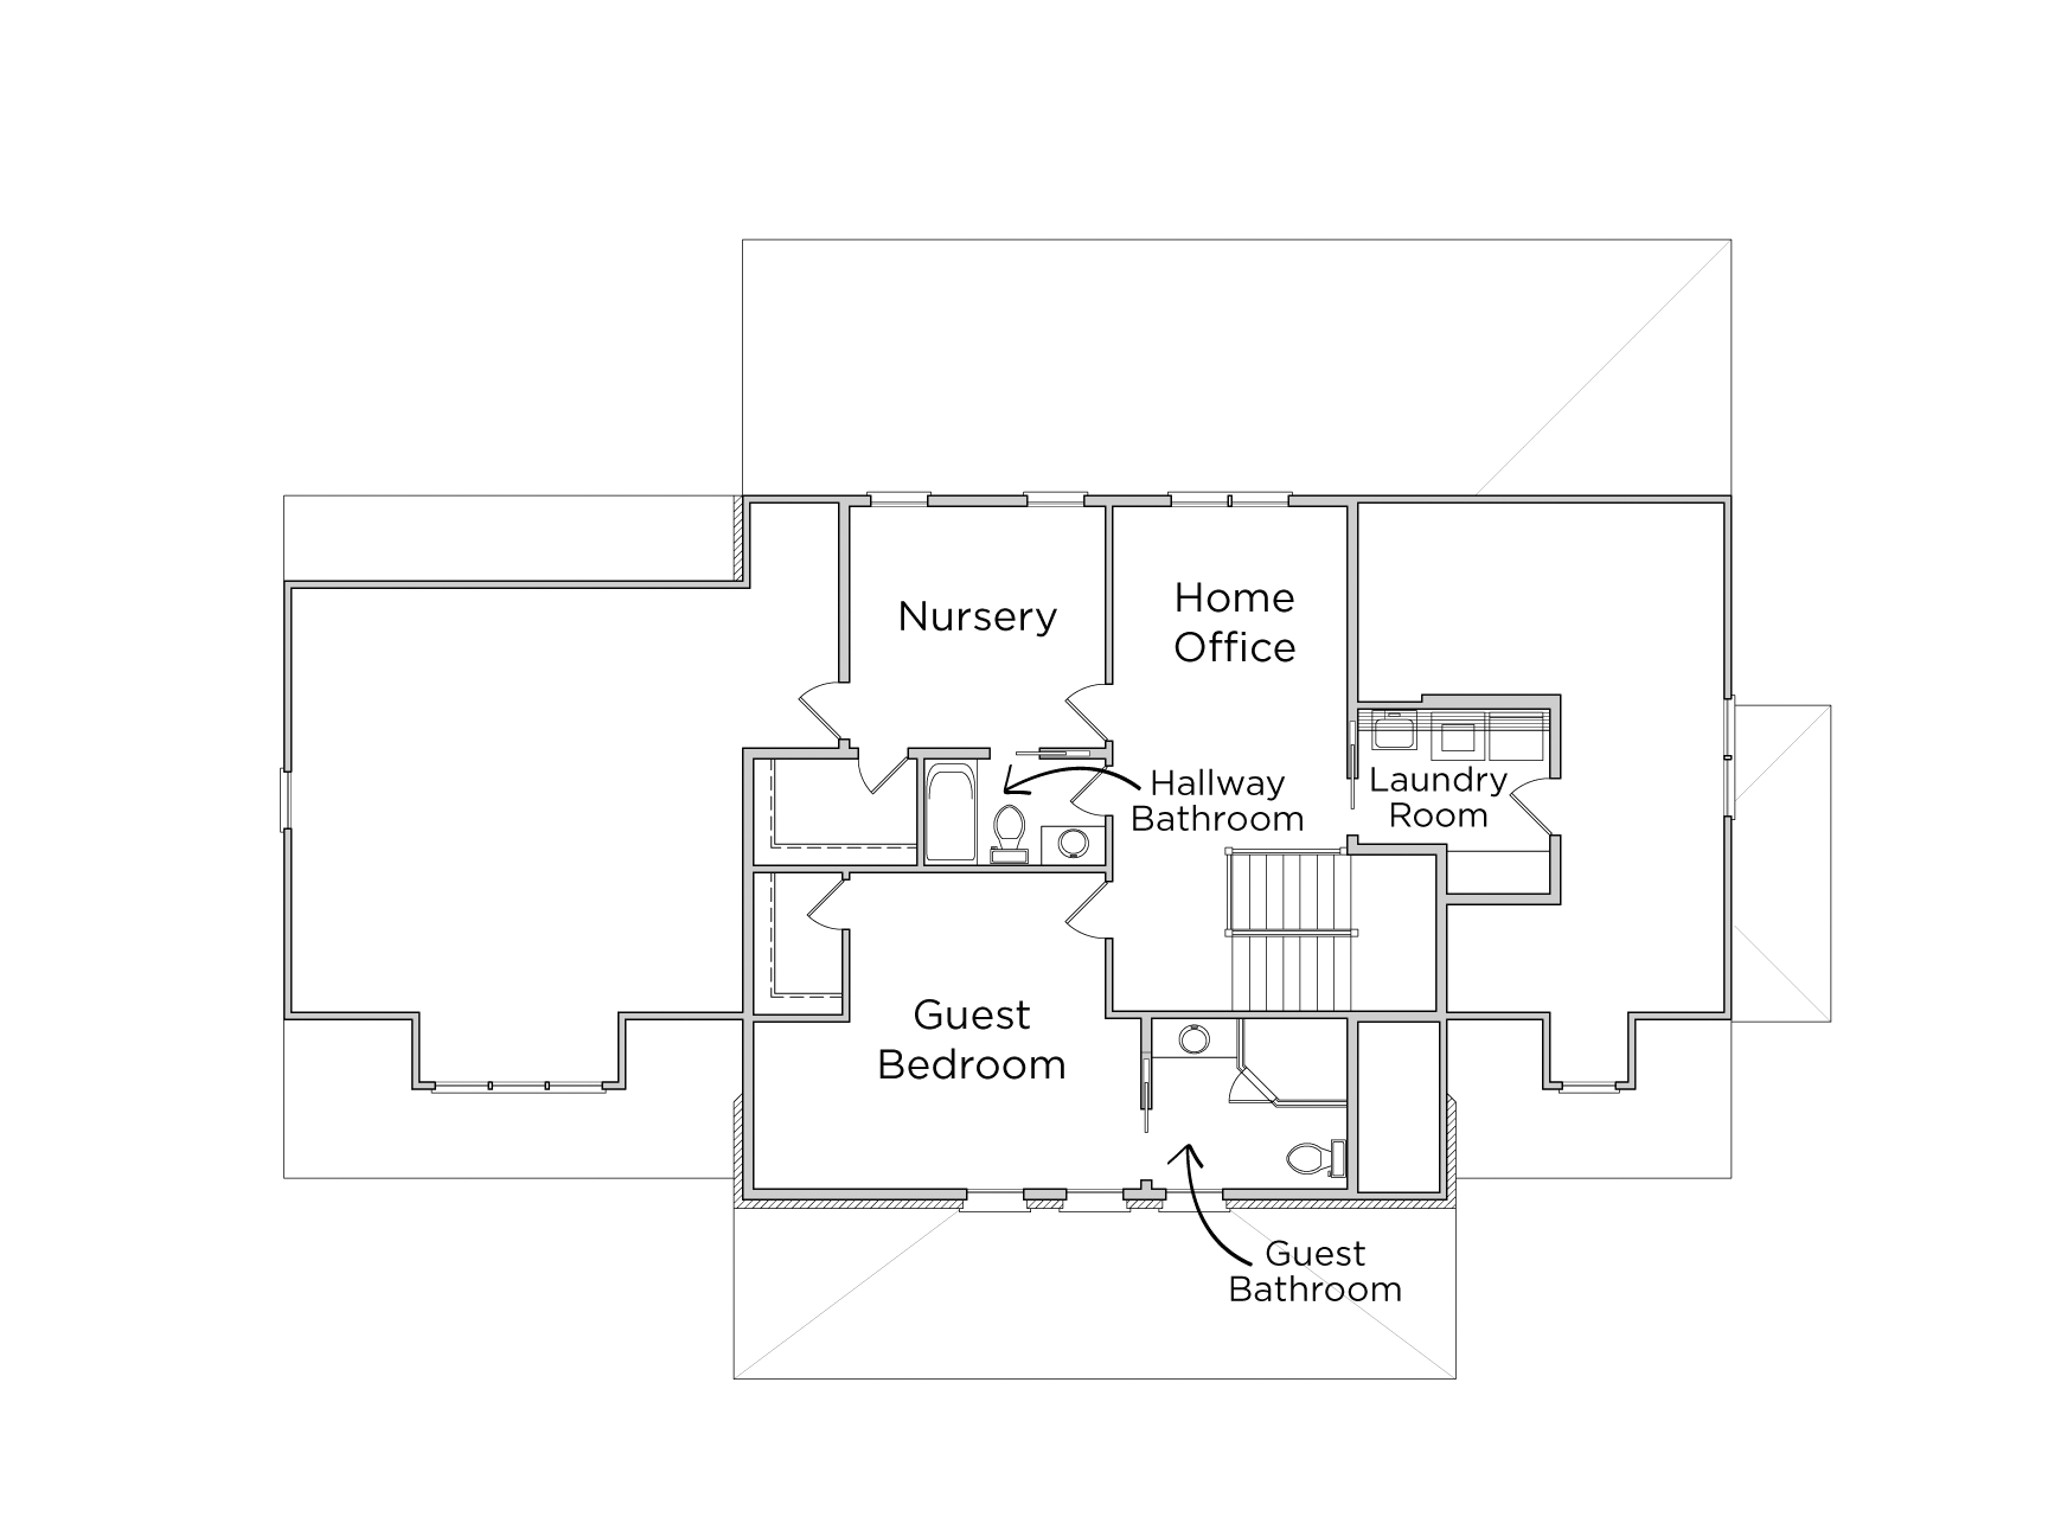 Smart Home Plan Floor Plans From Hgtv Smart Home 2016 Hgtv Smart Home